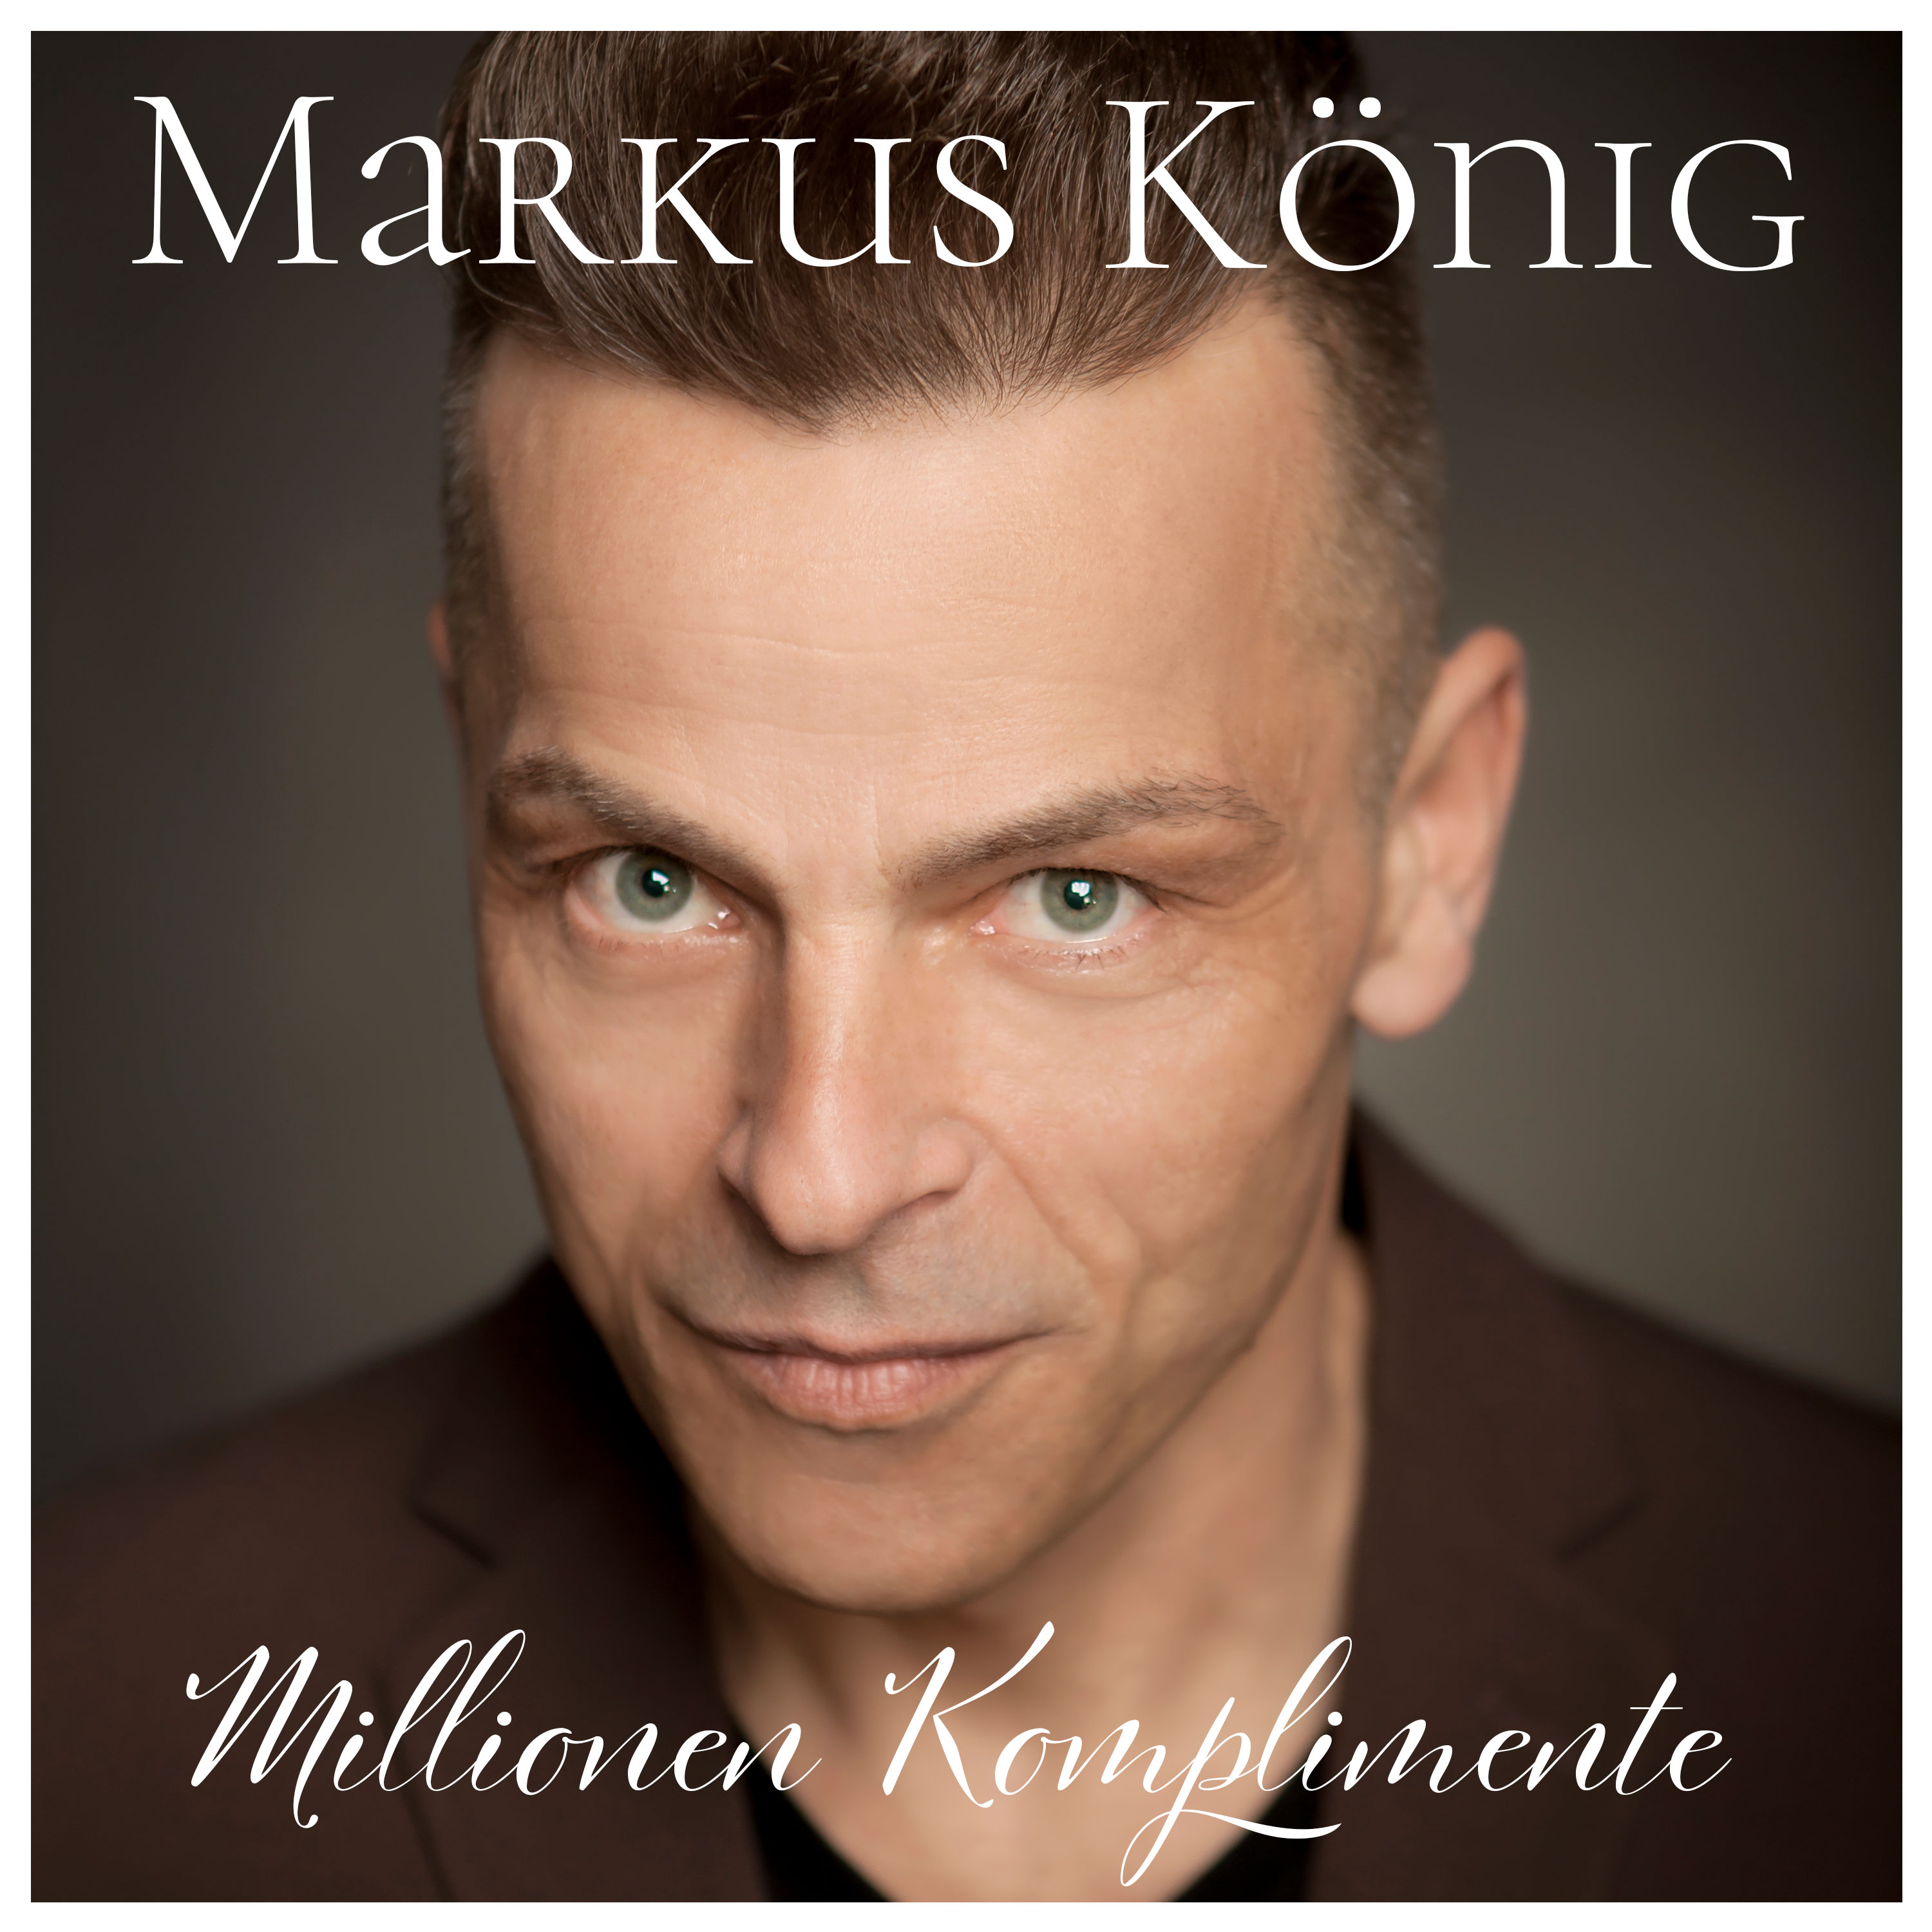 Markus Knig - Millionen Komplimente Cover.jpg